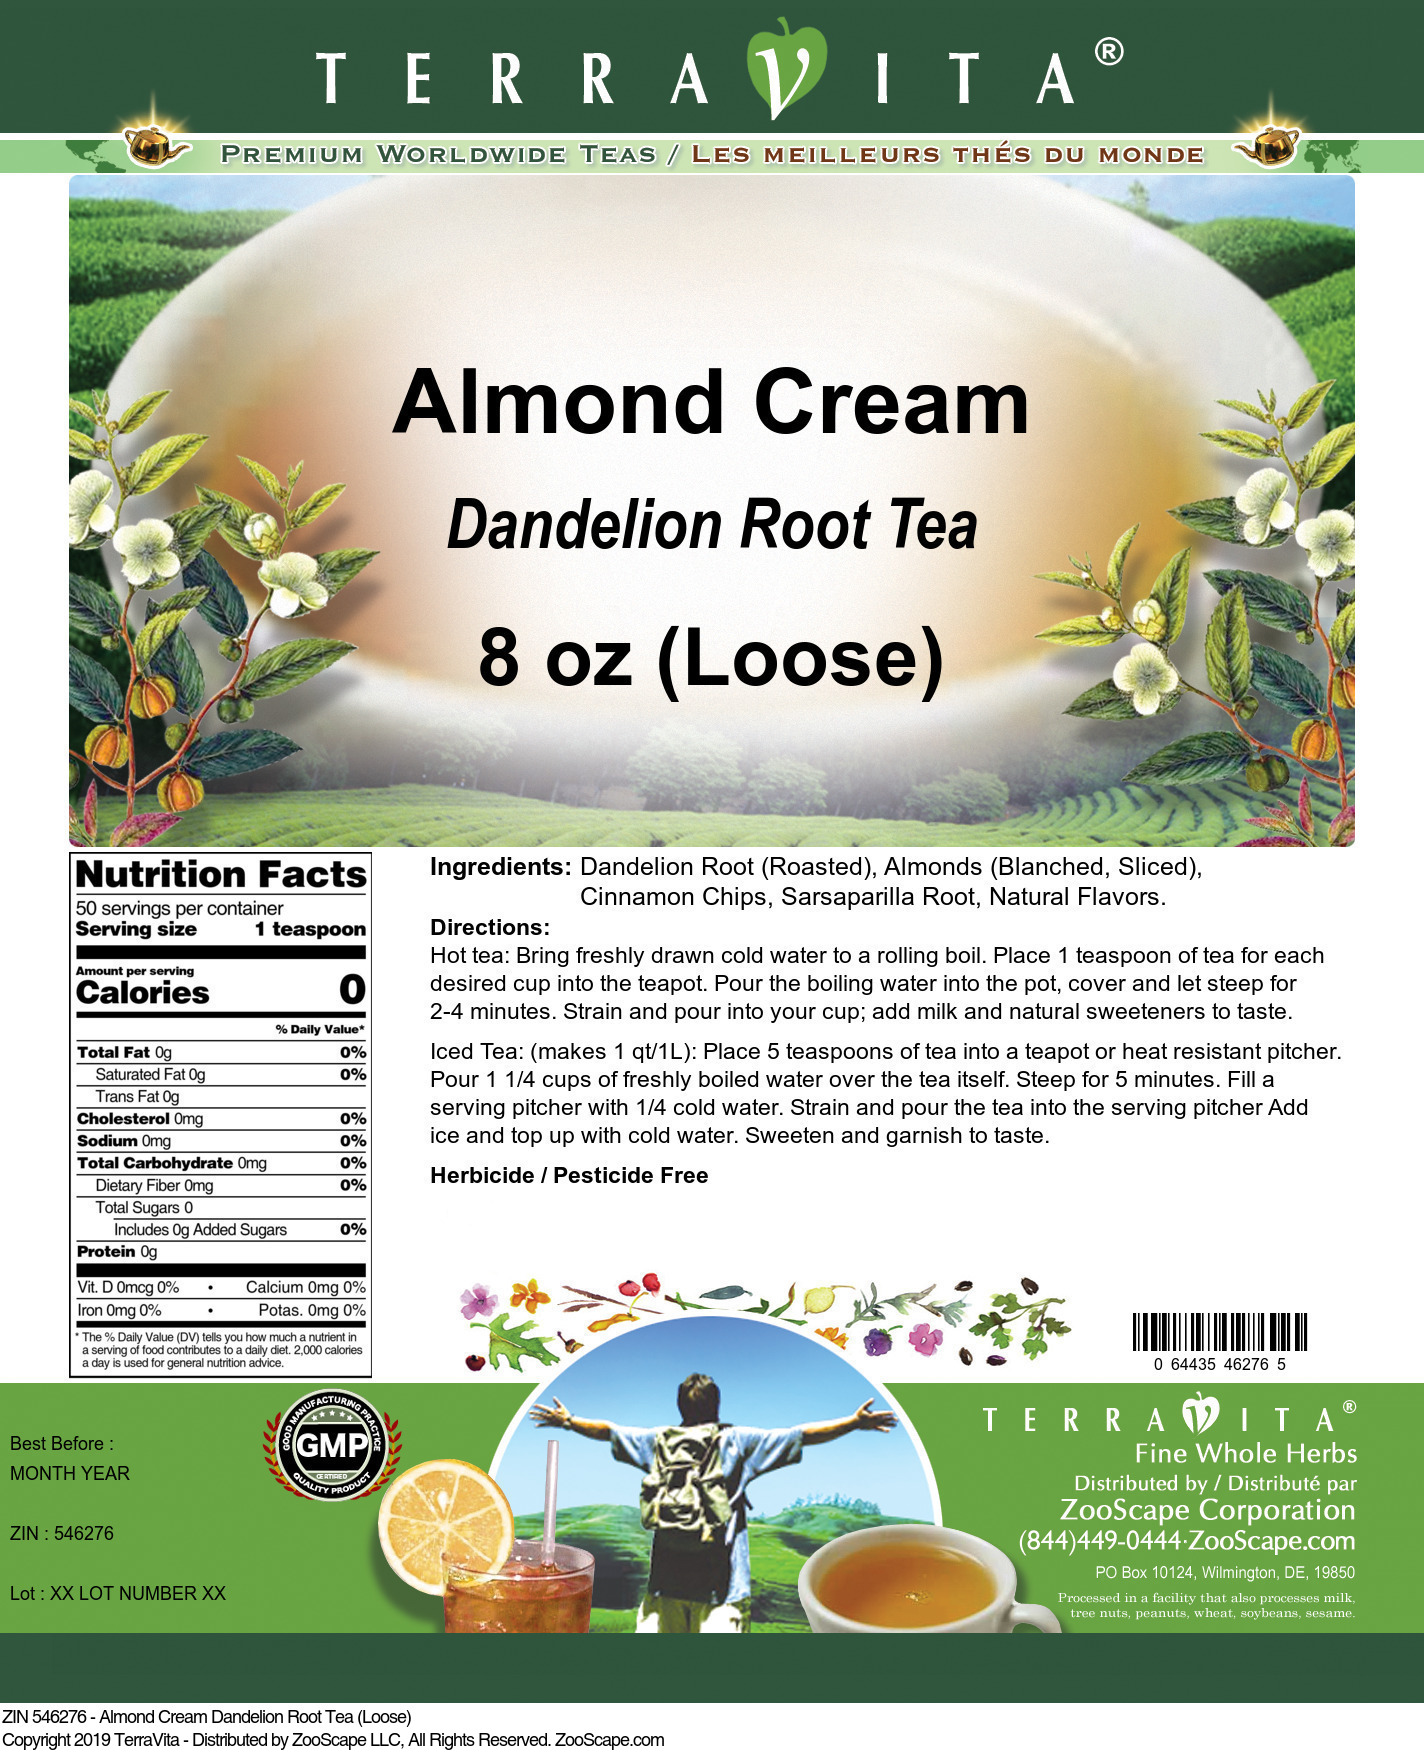 Almond Cream Dandelion Root Tea (Loose) - Label